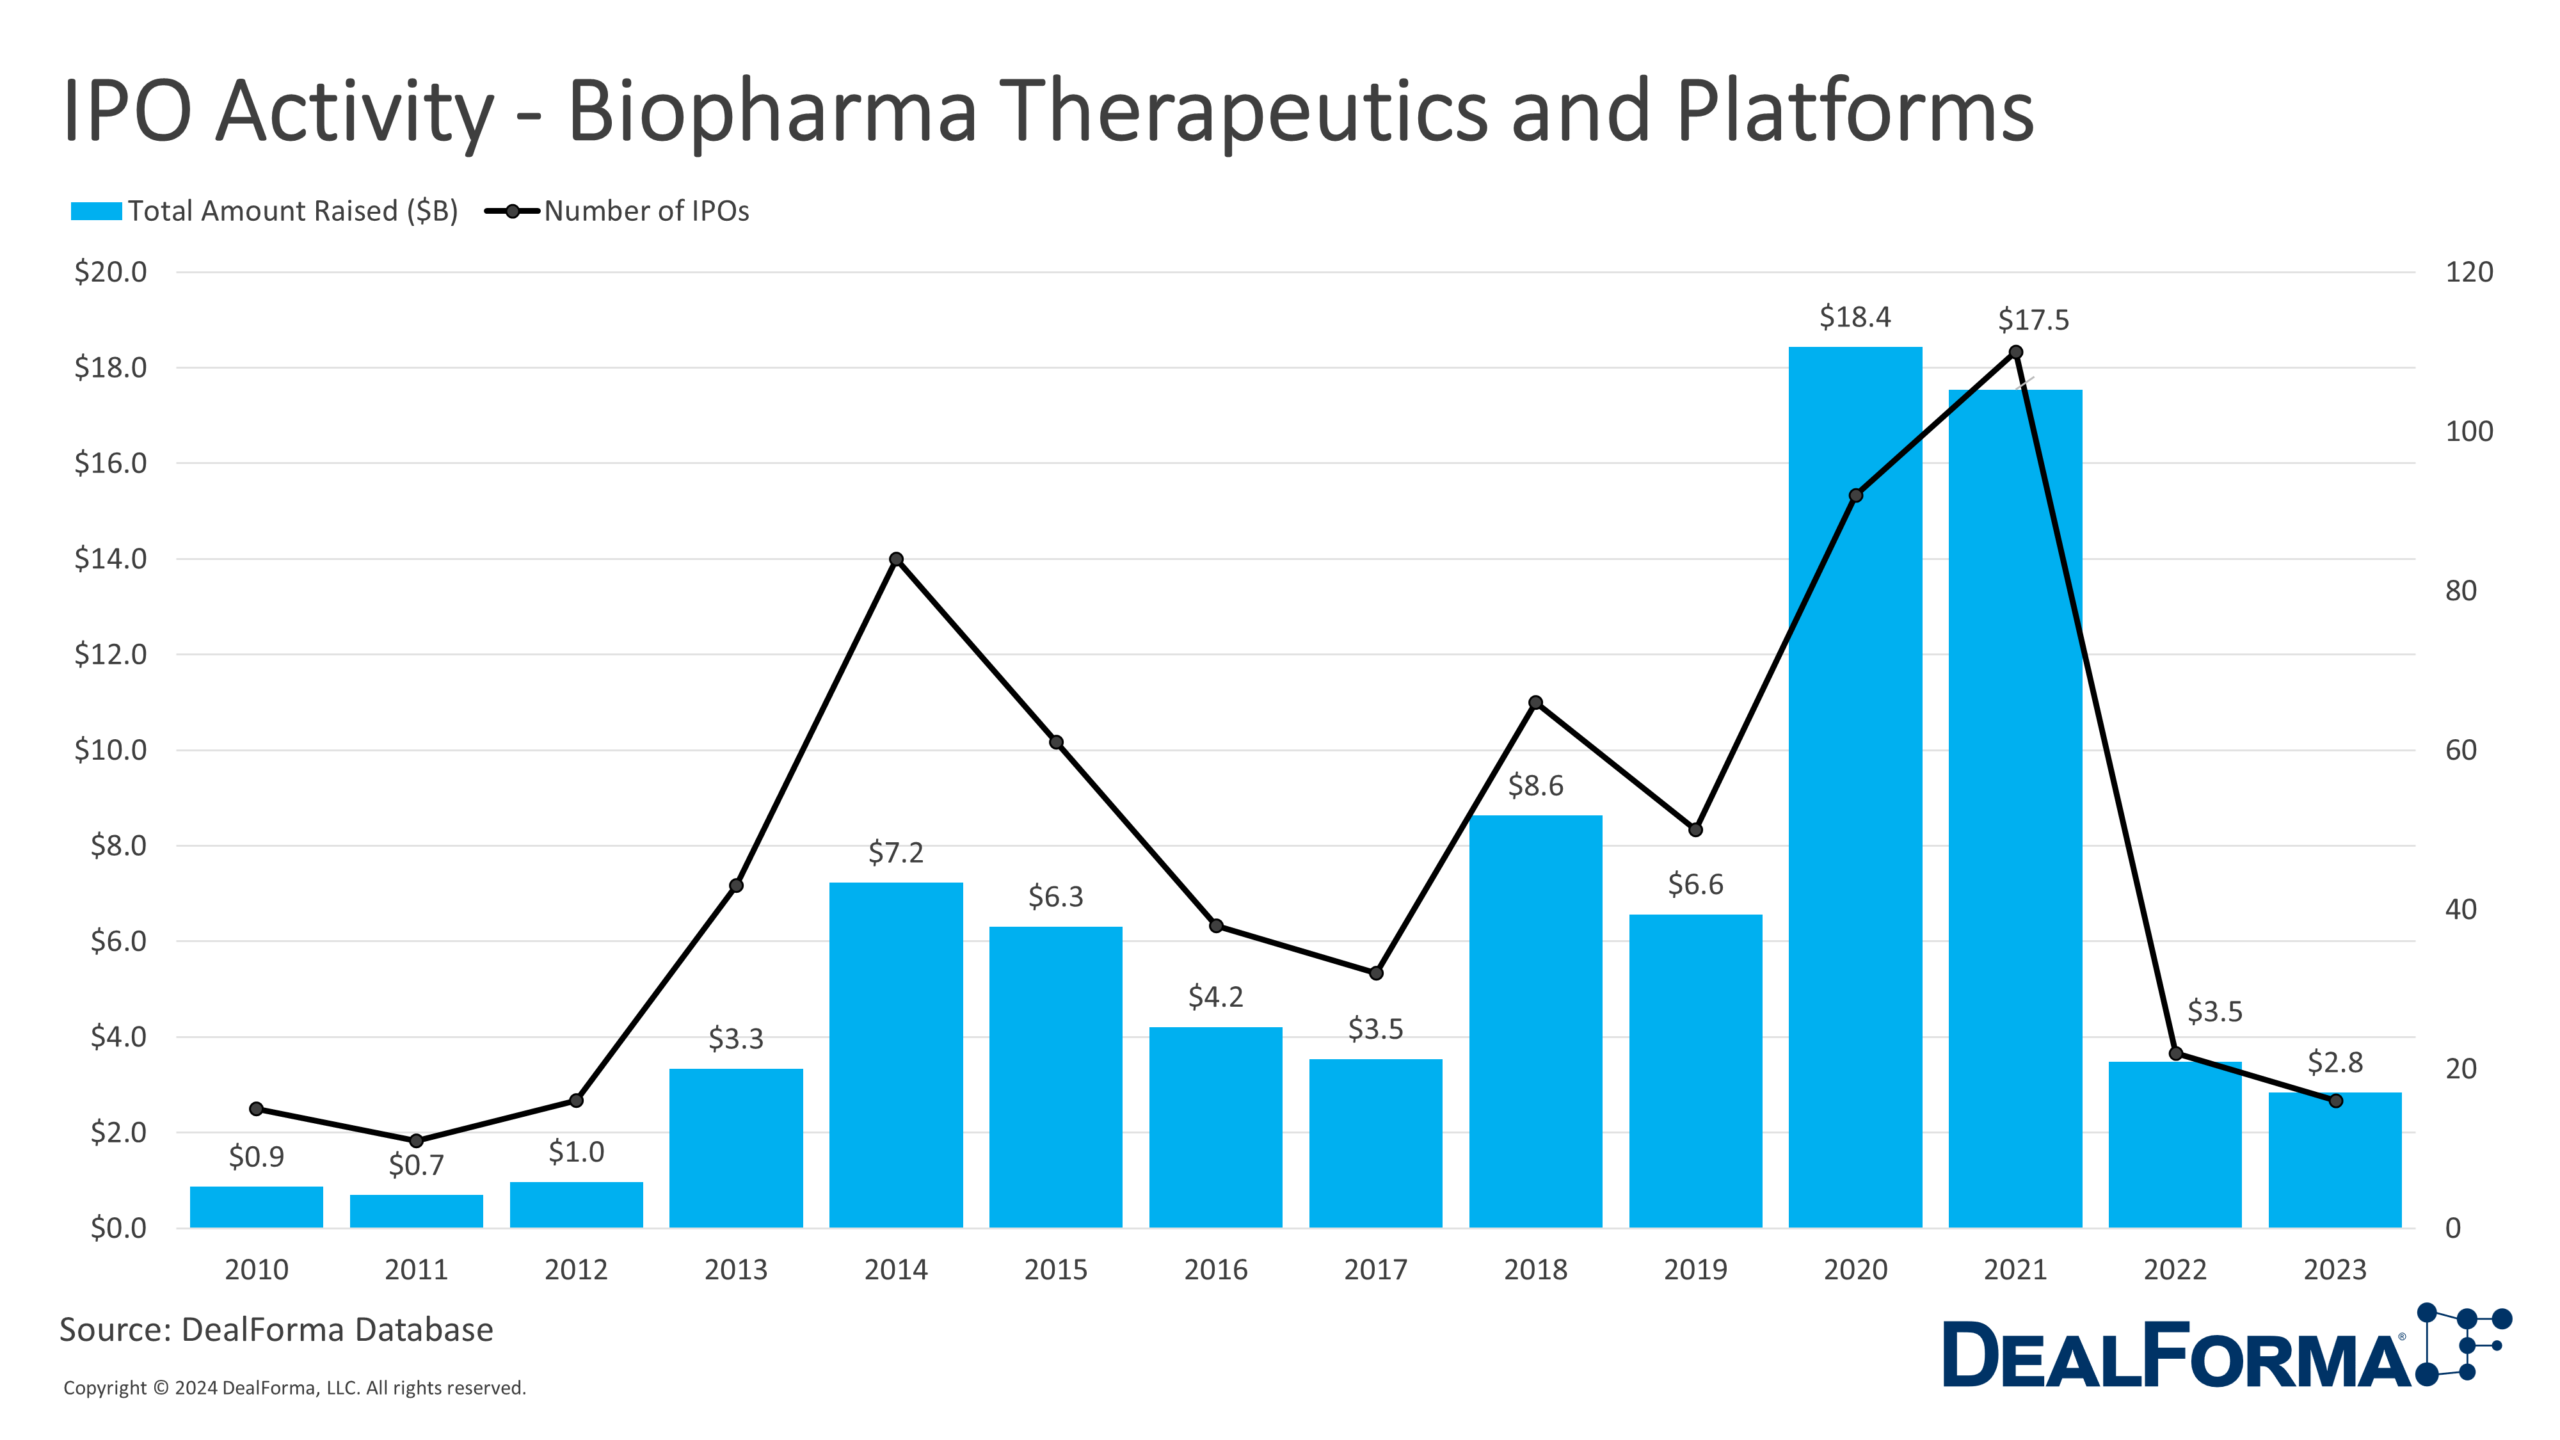 IPO Activity - Biopharma Therapeutics and Platforms